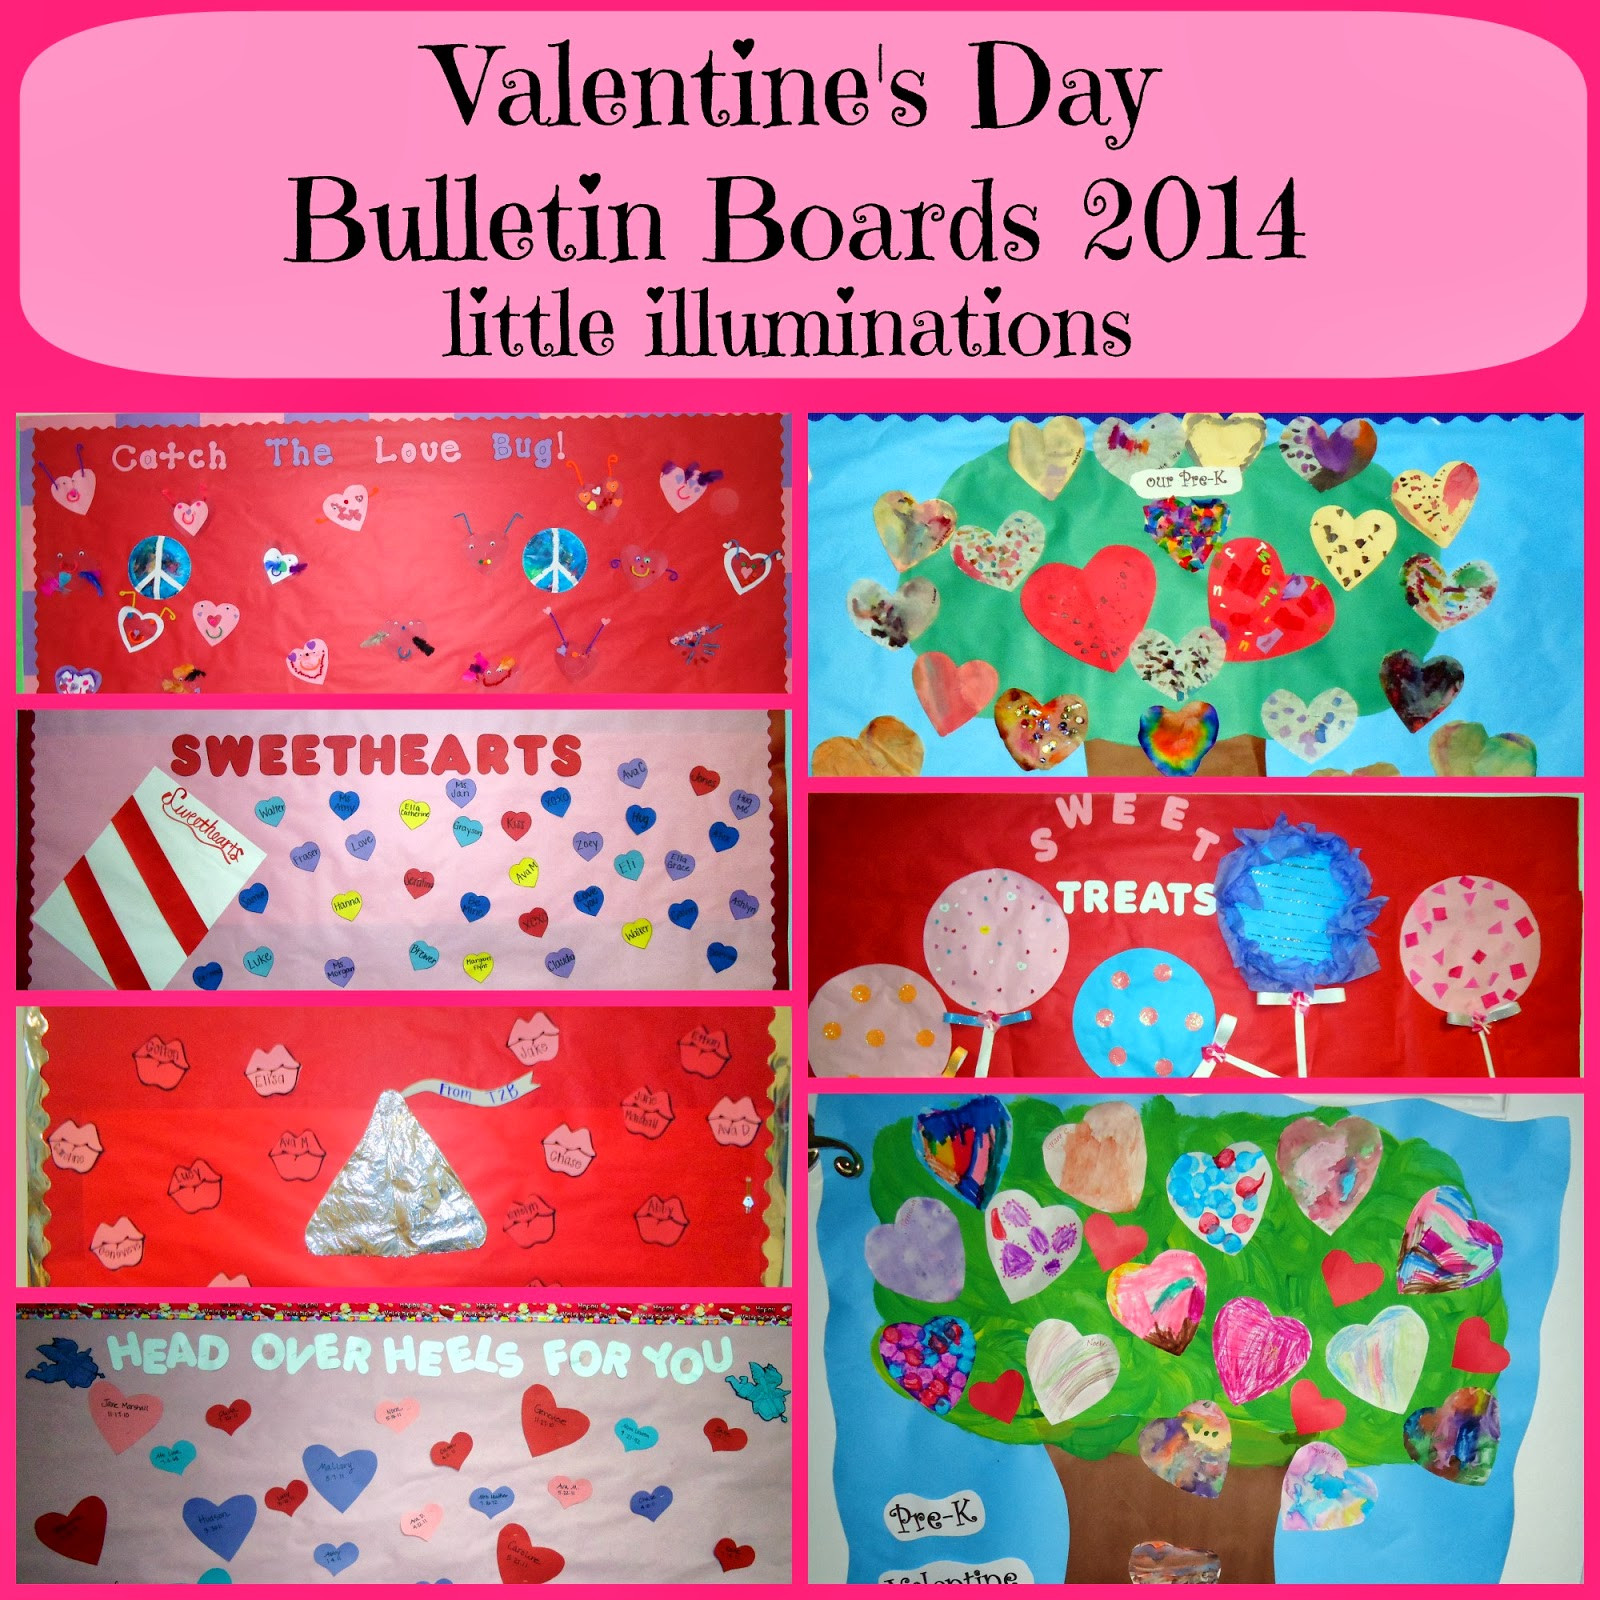 Valentines Day Bulletin Boards Ideas
 little illuminations Valentine s Day Bulletin Boards 2014